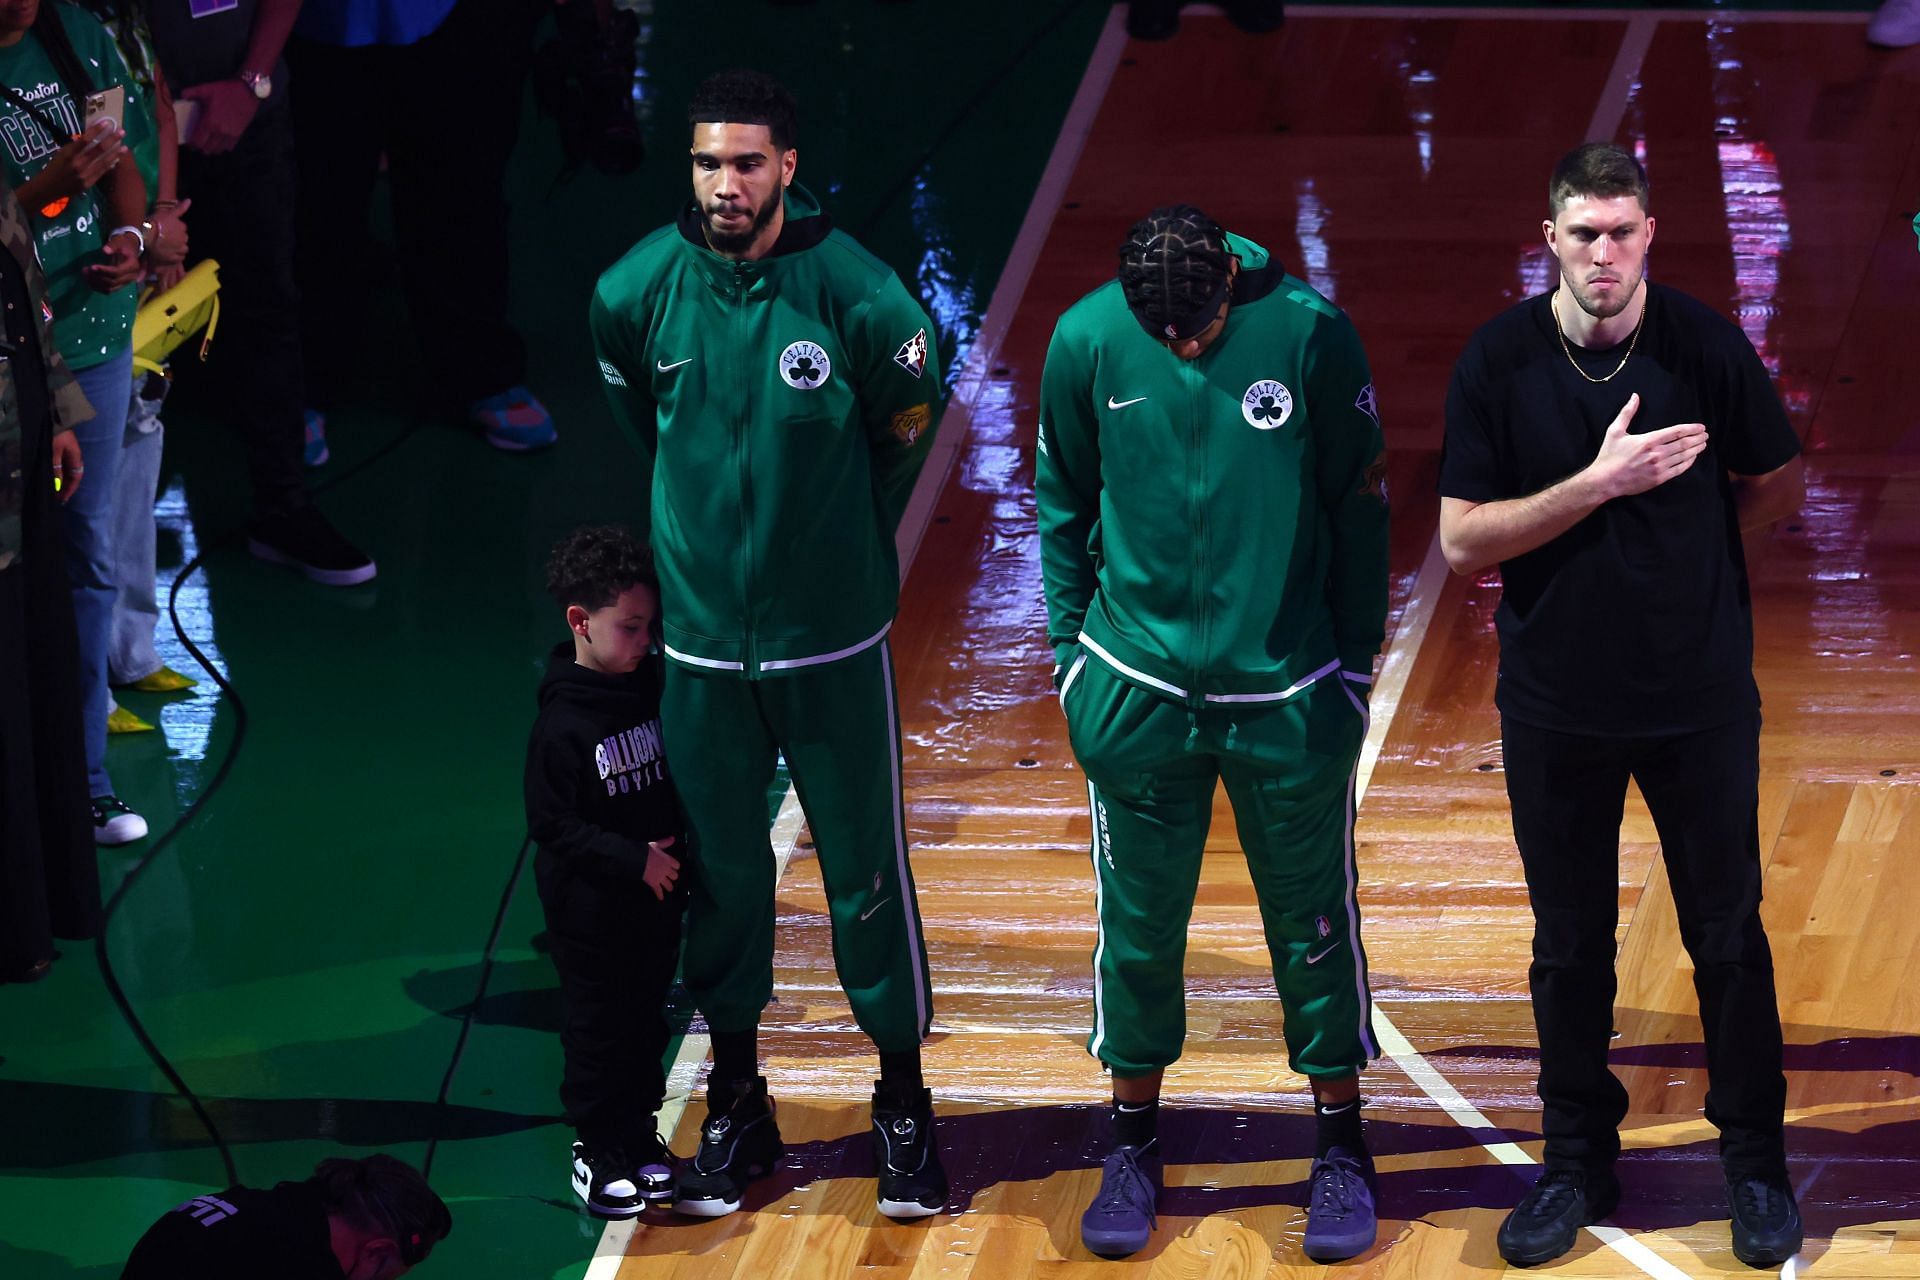 Juwan Morgan and Sam Hauser of the Boston Celtics next to Jayson Tatum and his son, Deuce